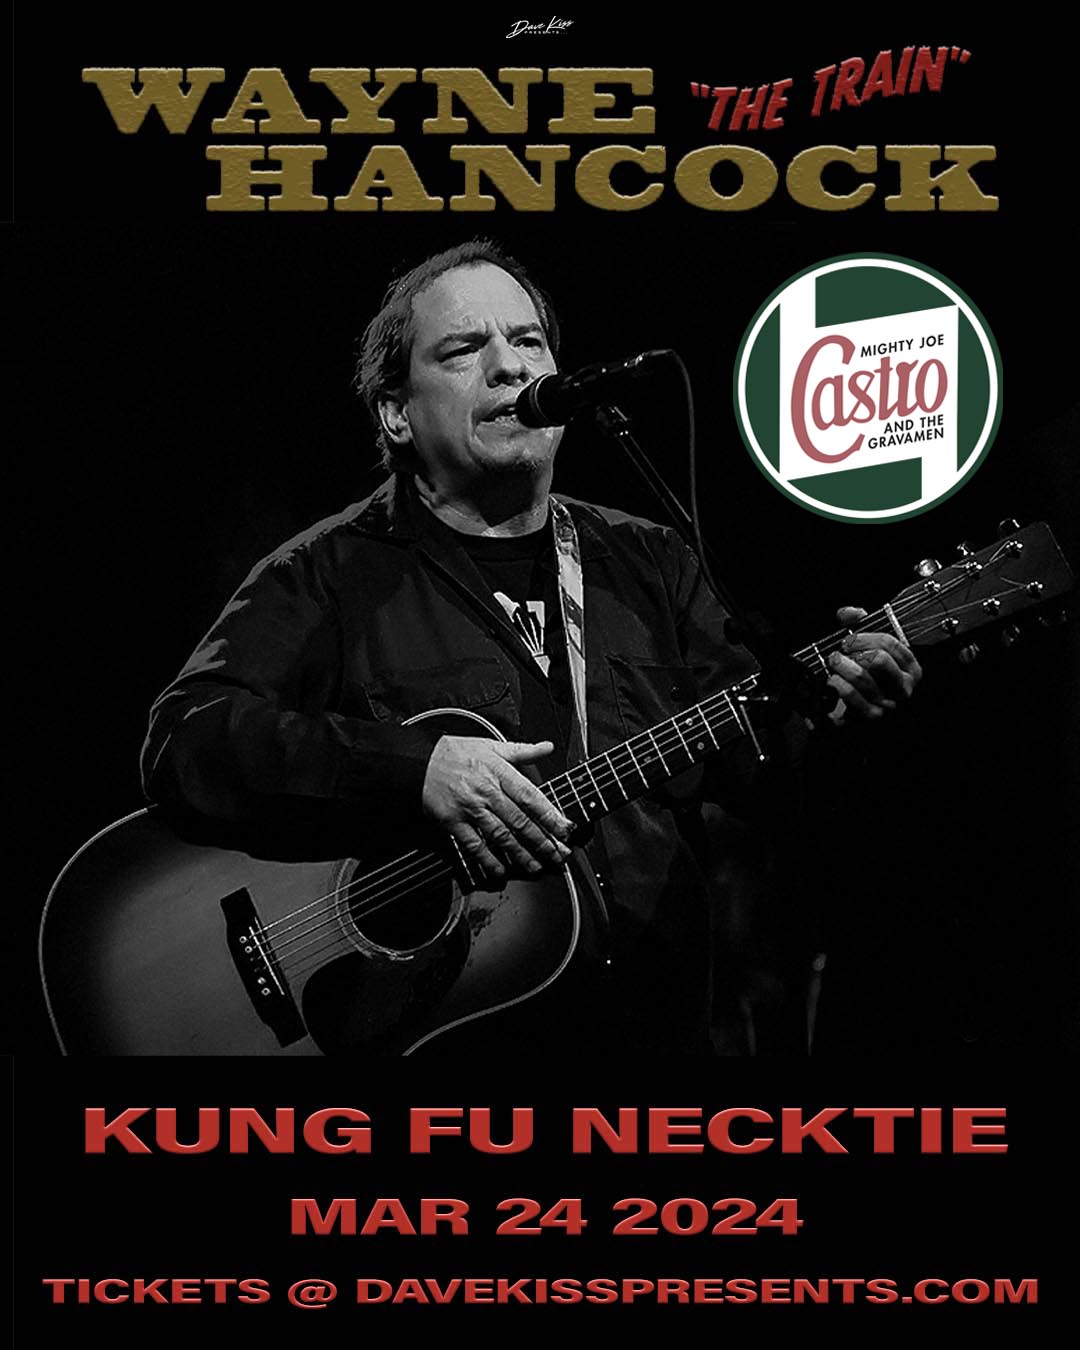 Wayne Hancock with Mighty Joe Castro and the Gravamen at Kung Fu Necktie in Philadelphia on Sunday March 24, 2024.